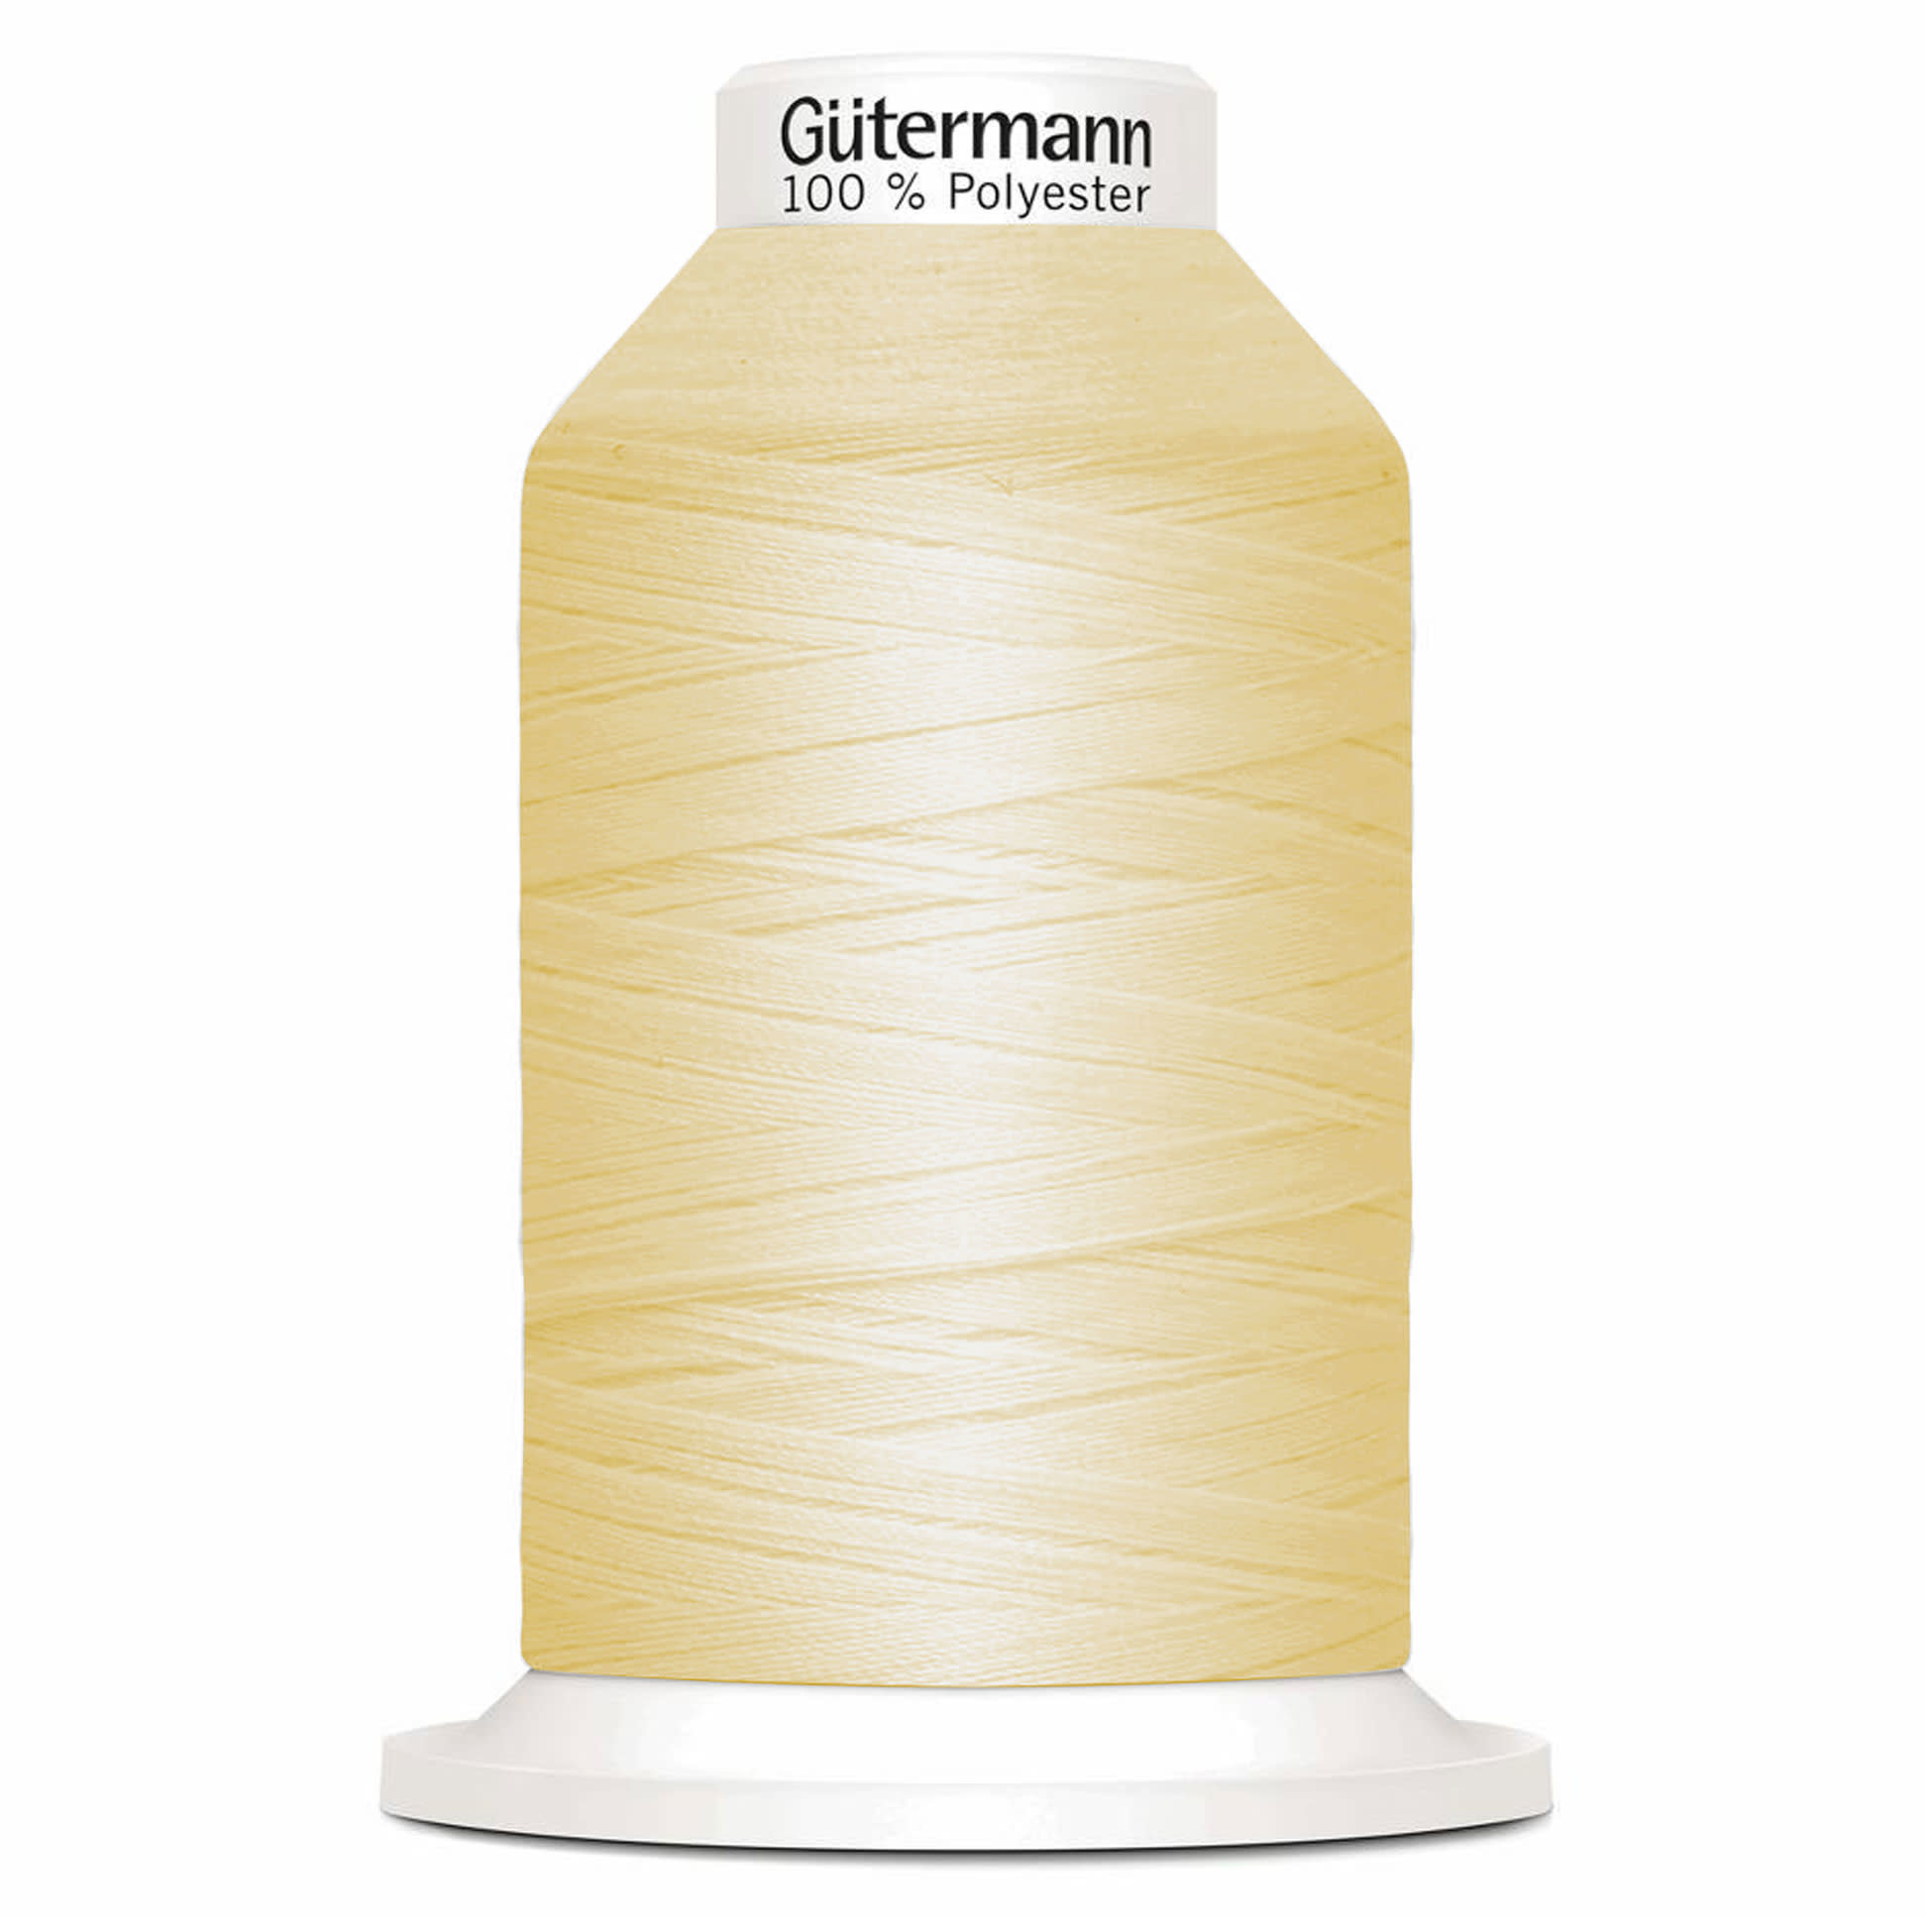 Gütermann Gütermann premium serger/overlock thread 815 1000m